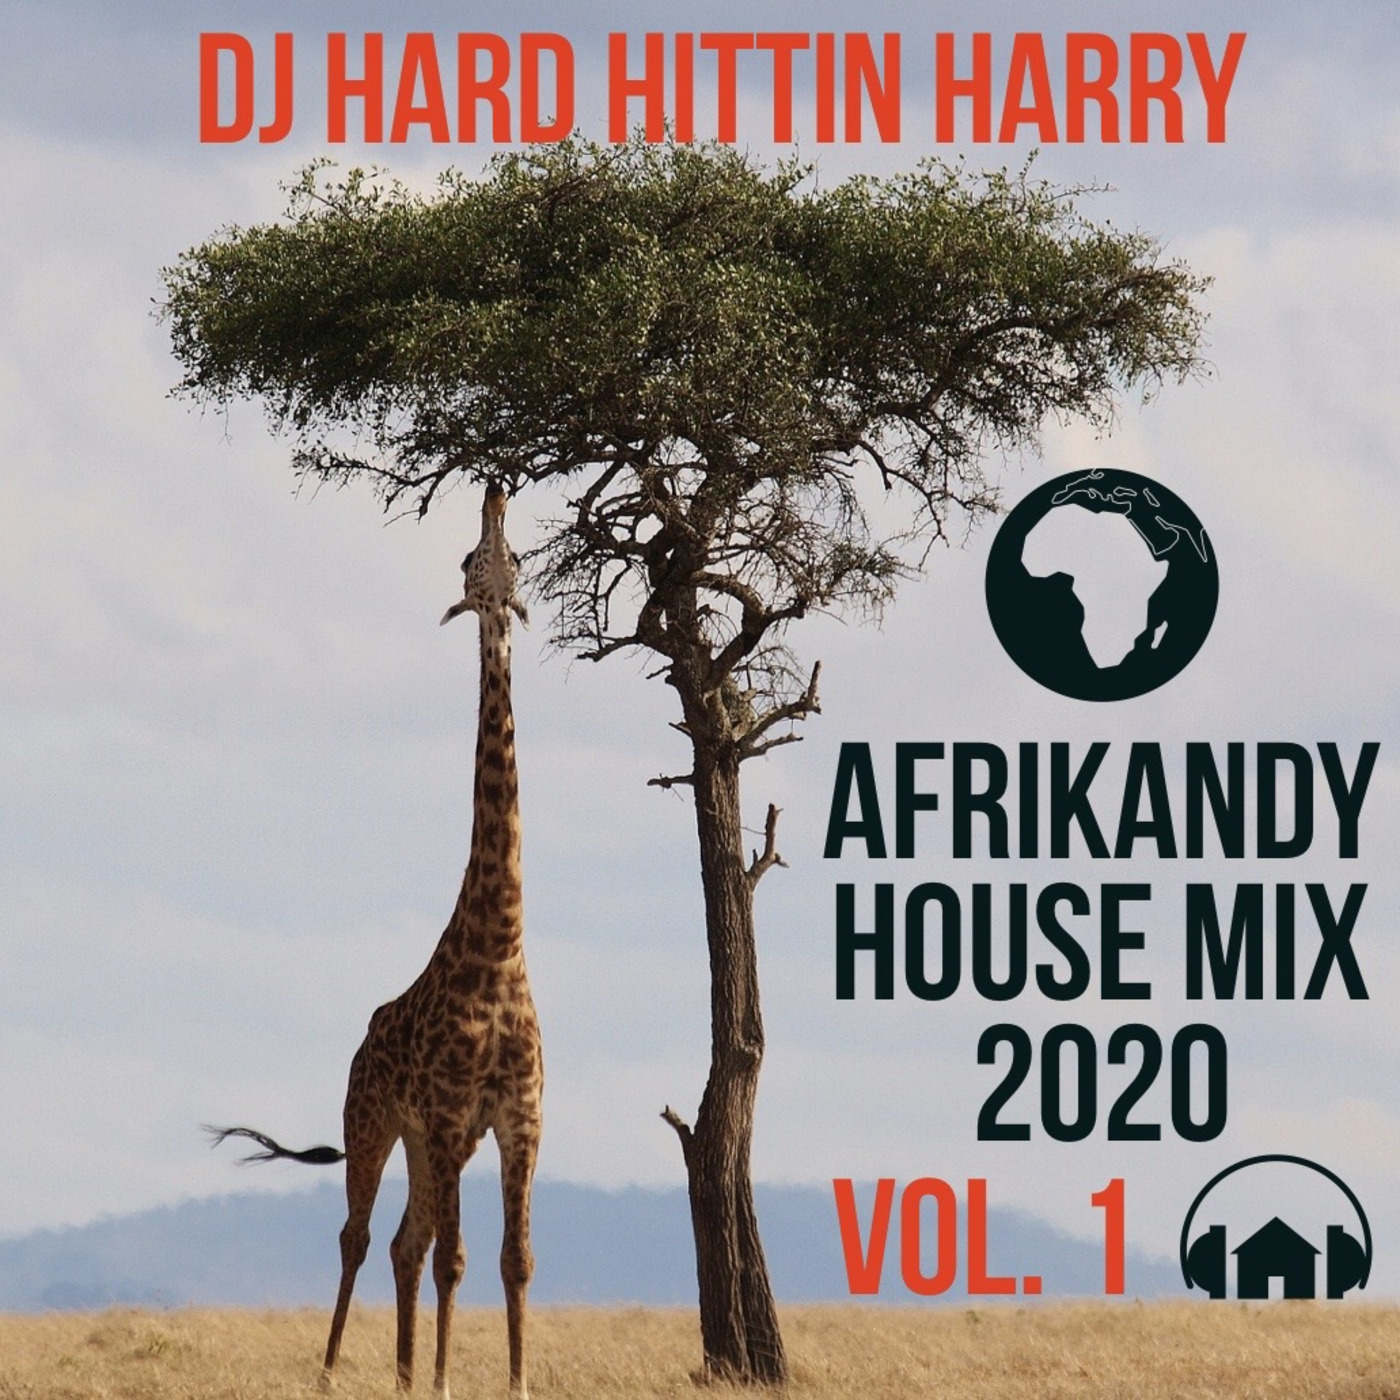 AFRIKANDY 2020 HOUSE MIX VOL. 1 - MIXED BY DJ HARD HITTIN HARRY